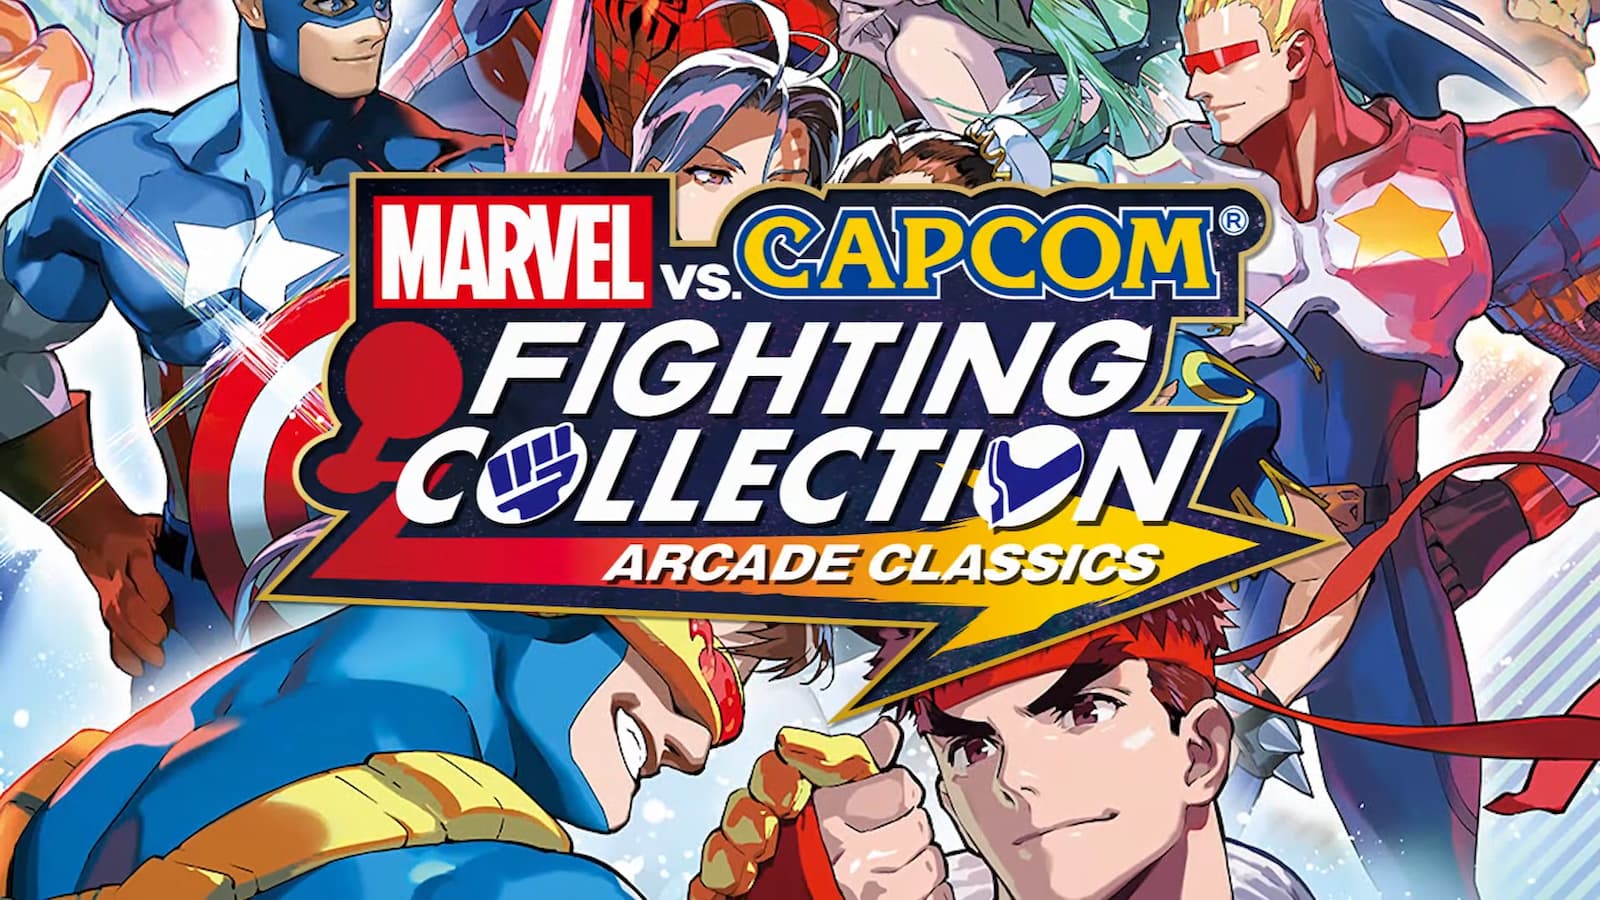 Marvel vs Capcom Fighting Collection Arcade Classics release date